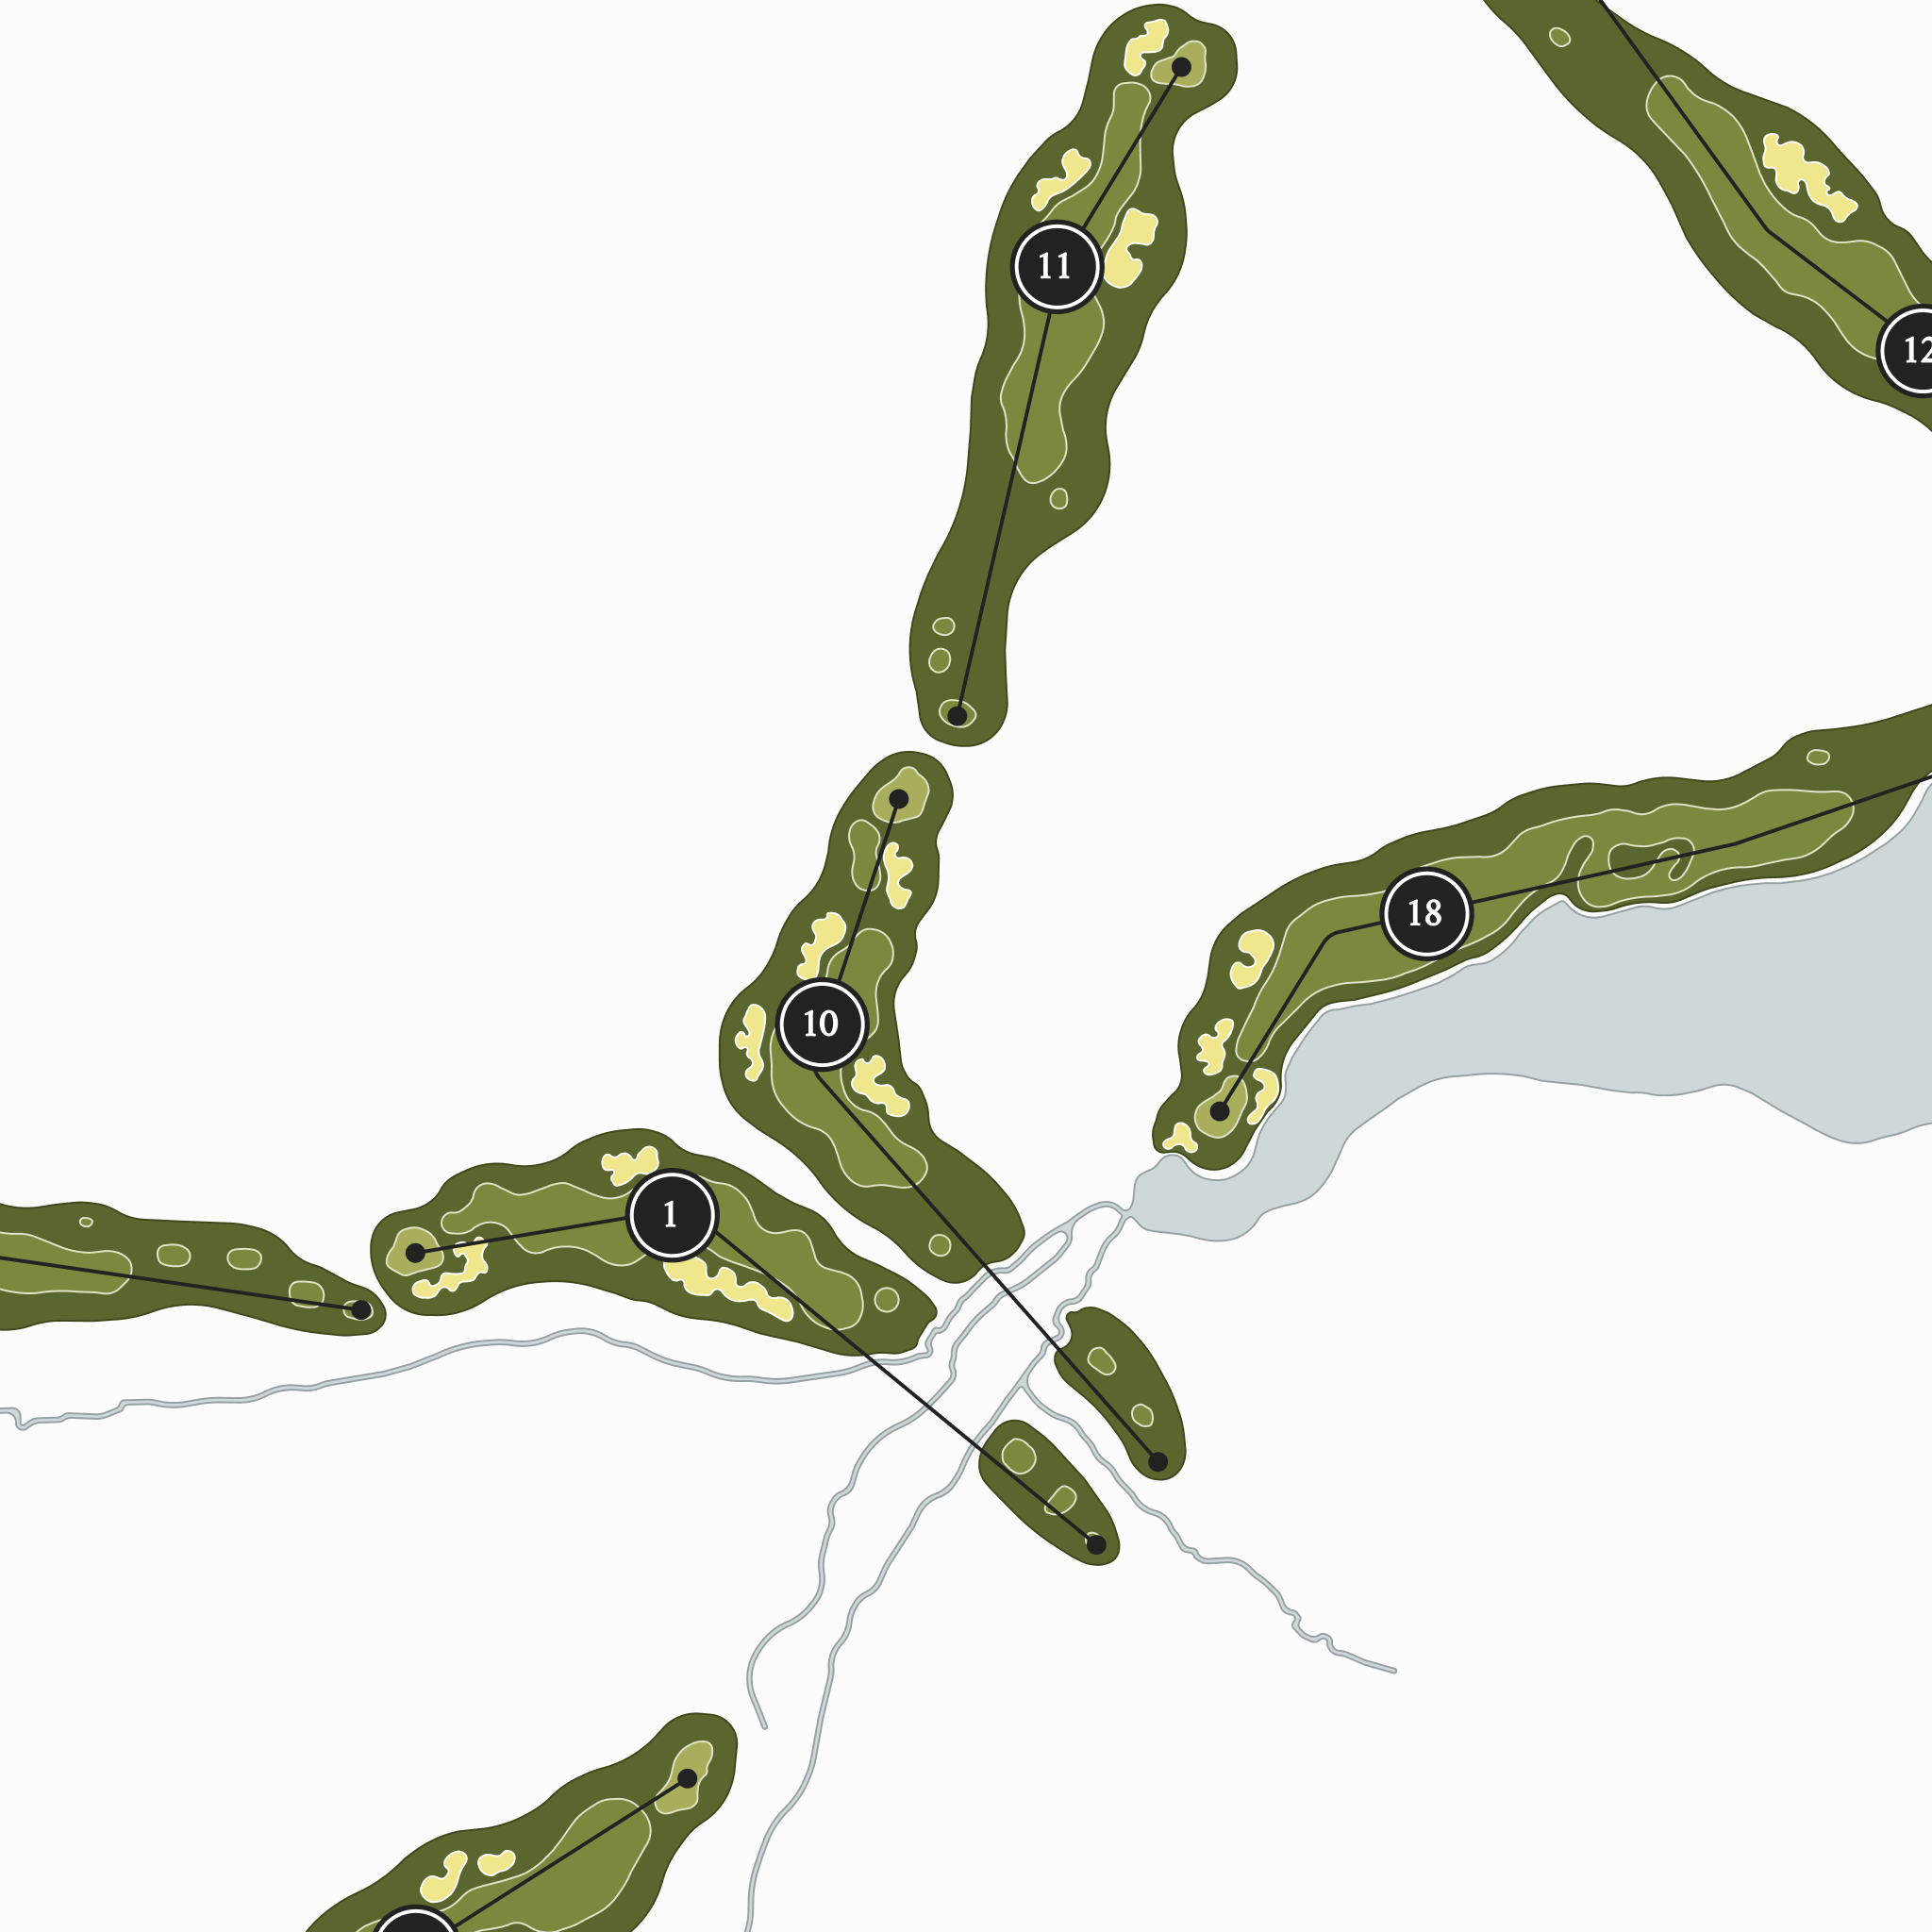 Spring Creek Golf Club | Golf Course Map | Close Up